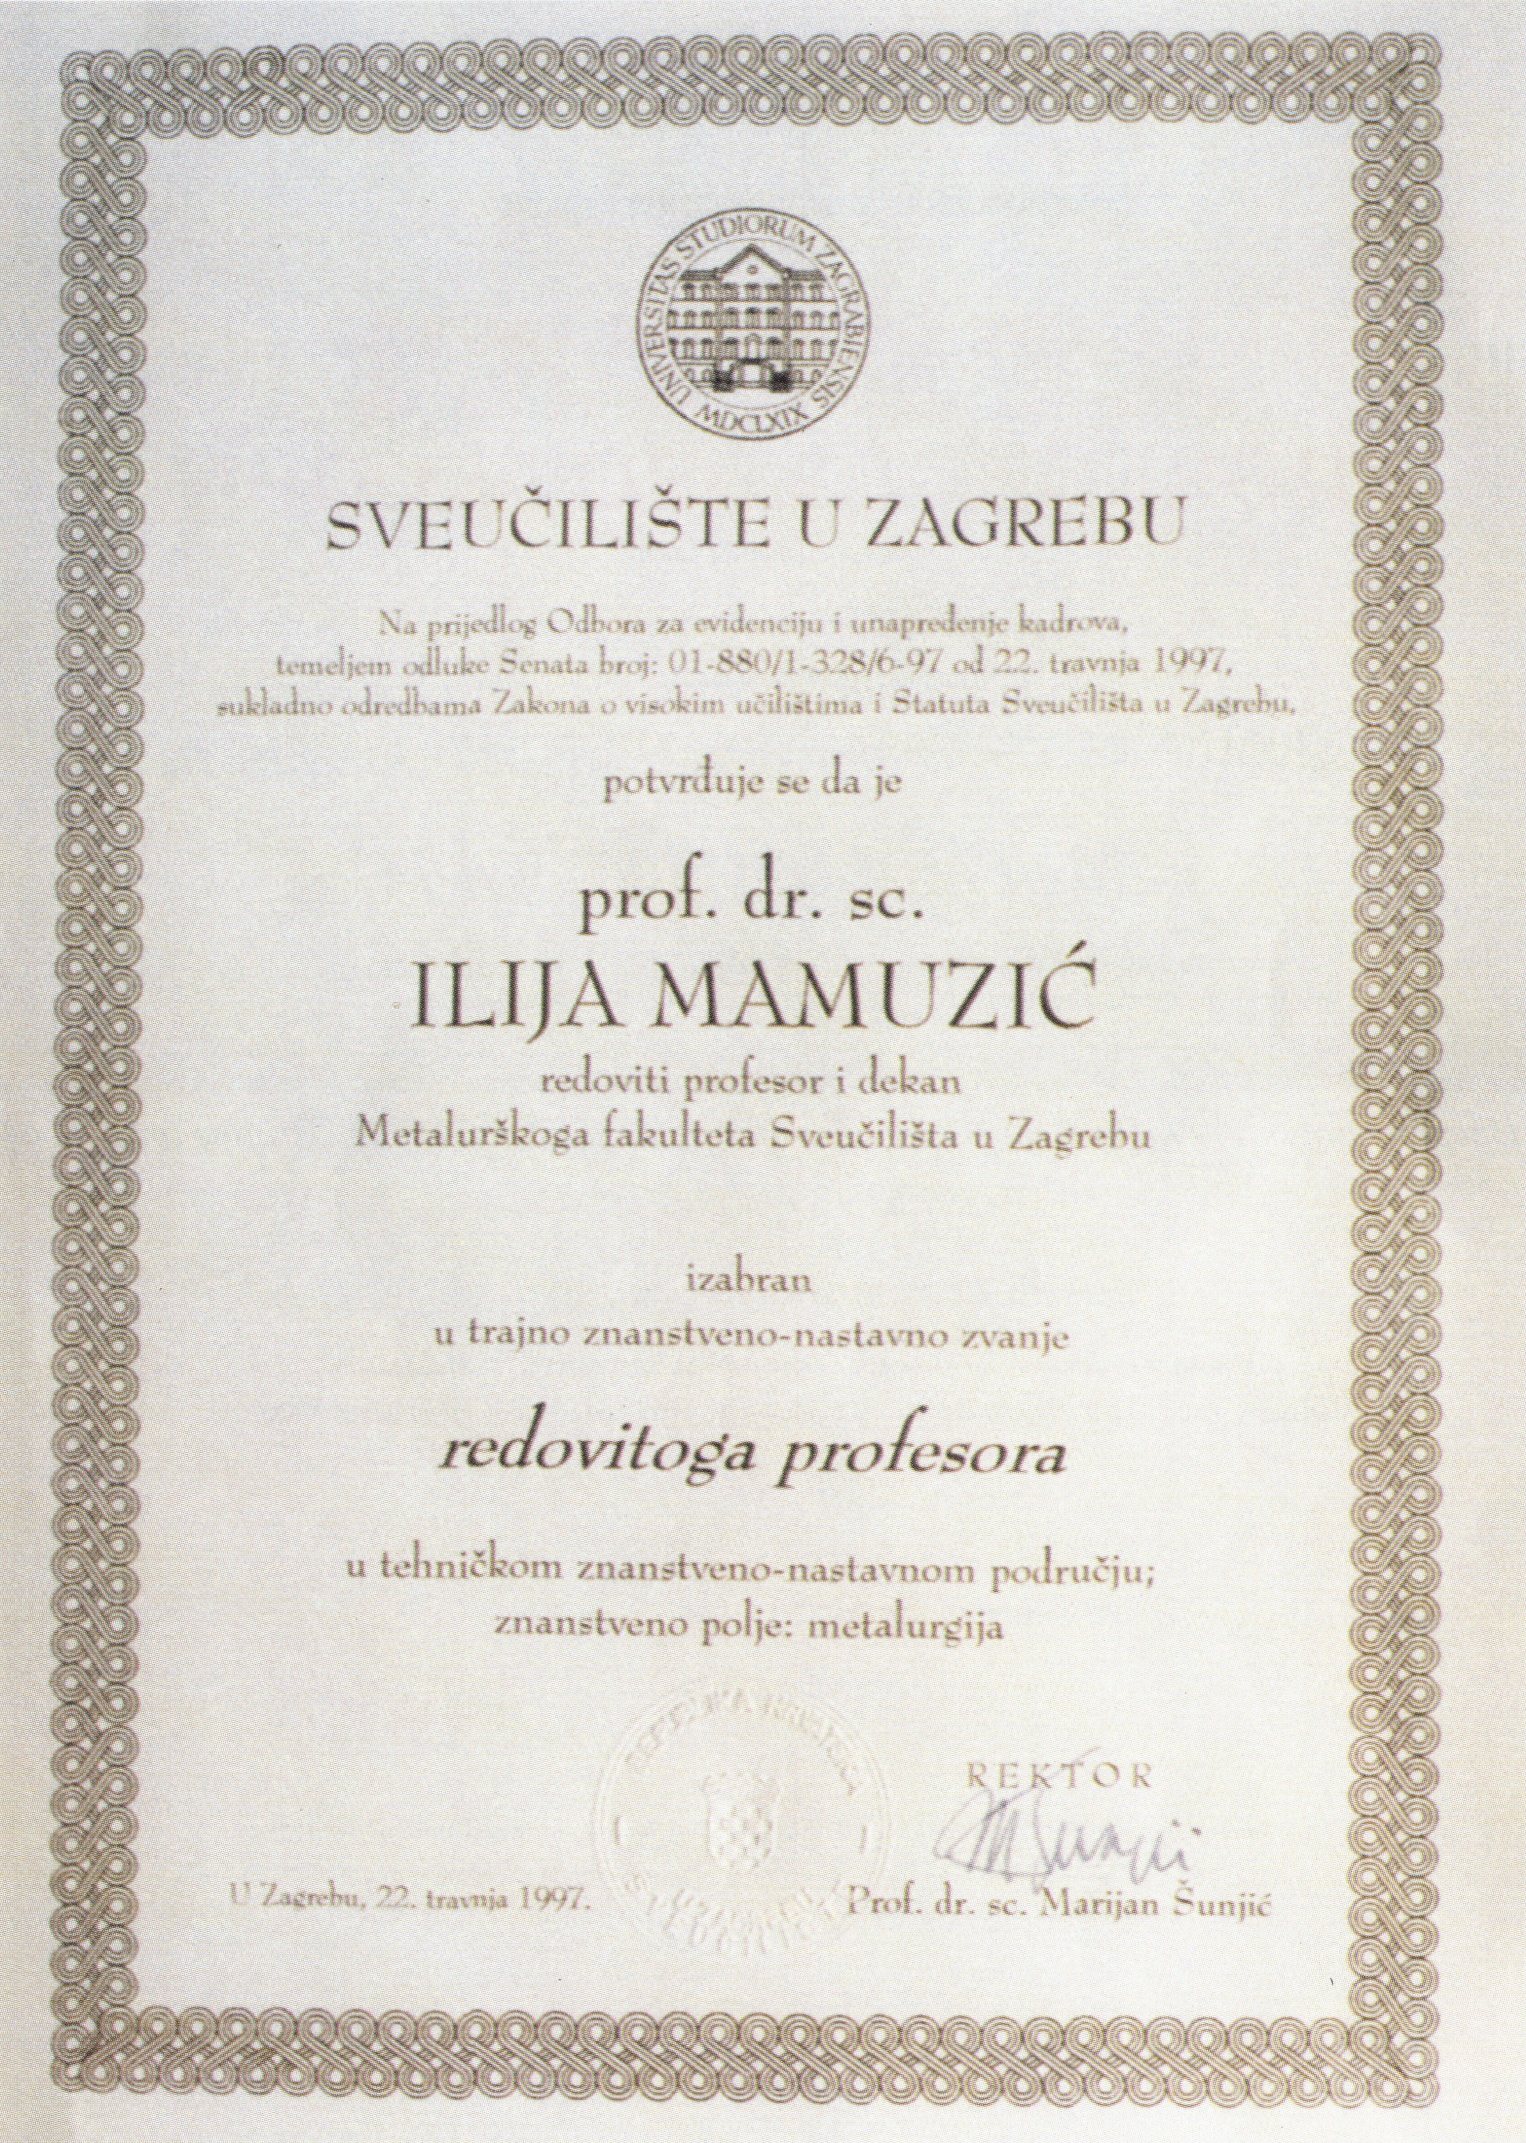 1997-Zagreb-izbor_u_trajno_zn_nast_zvanje-redovitoga_profesora